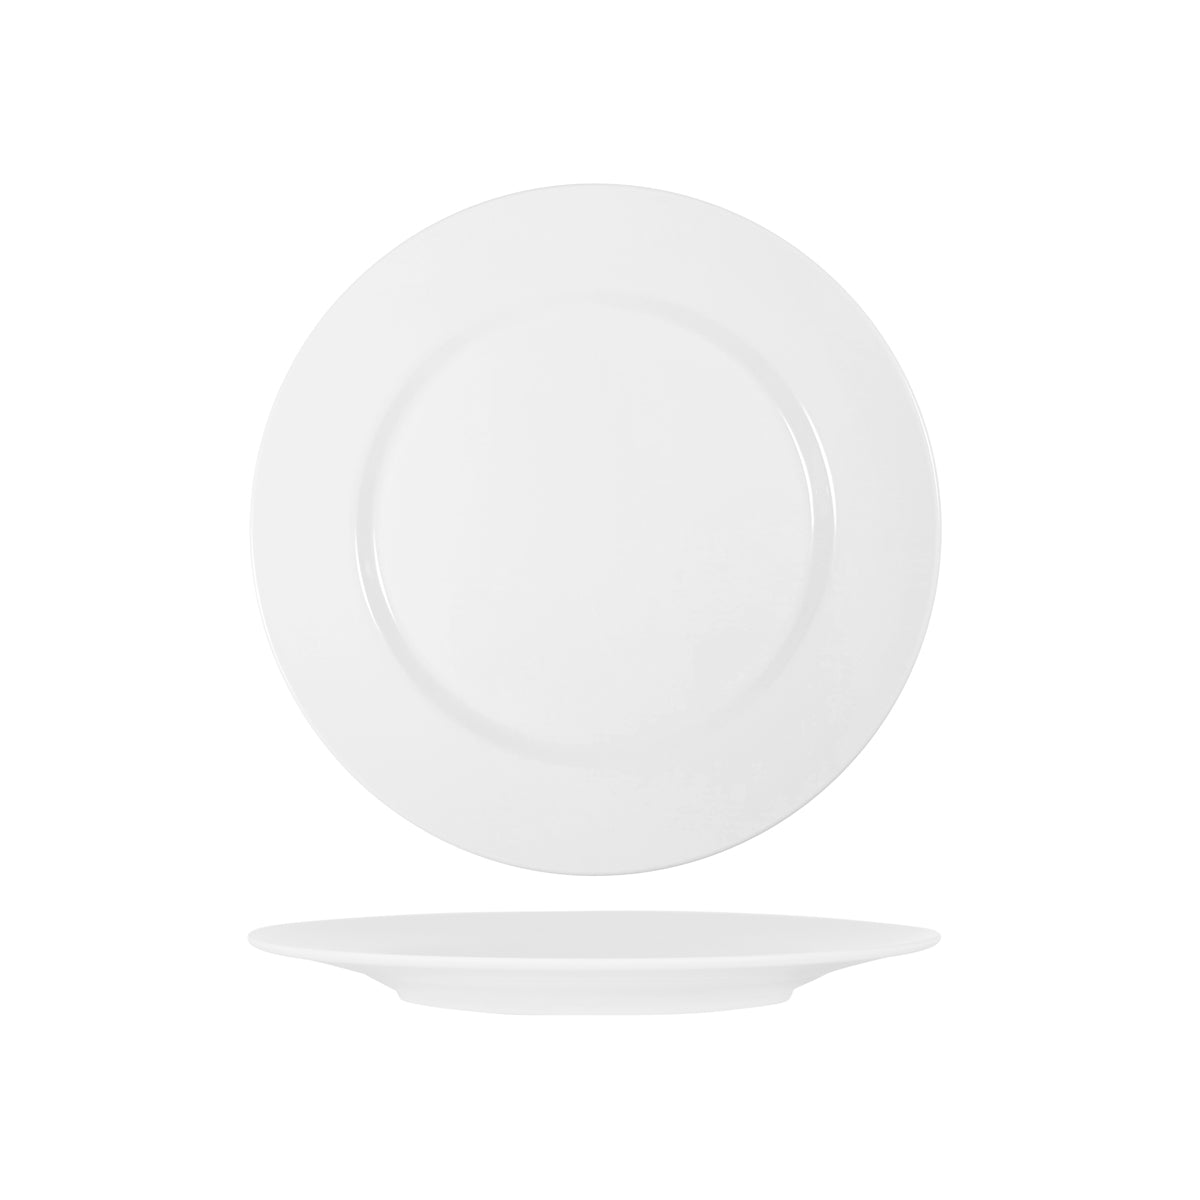 49100 Superware White Round Plate Wide Rim 200mm Tomkin Australia Hospitality Supplies